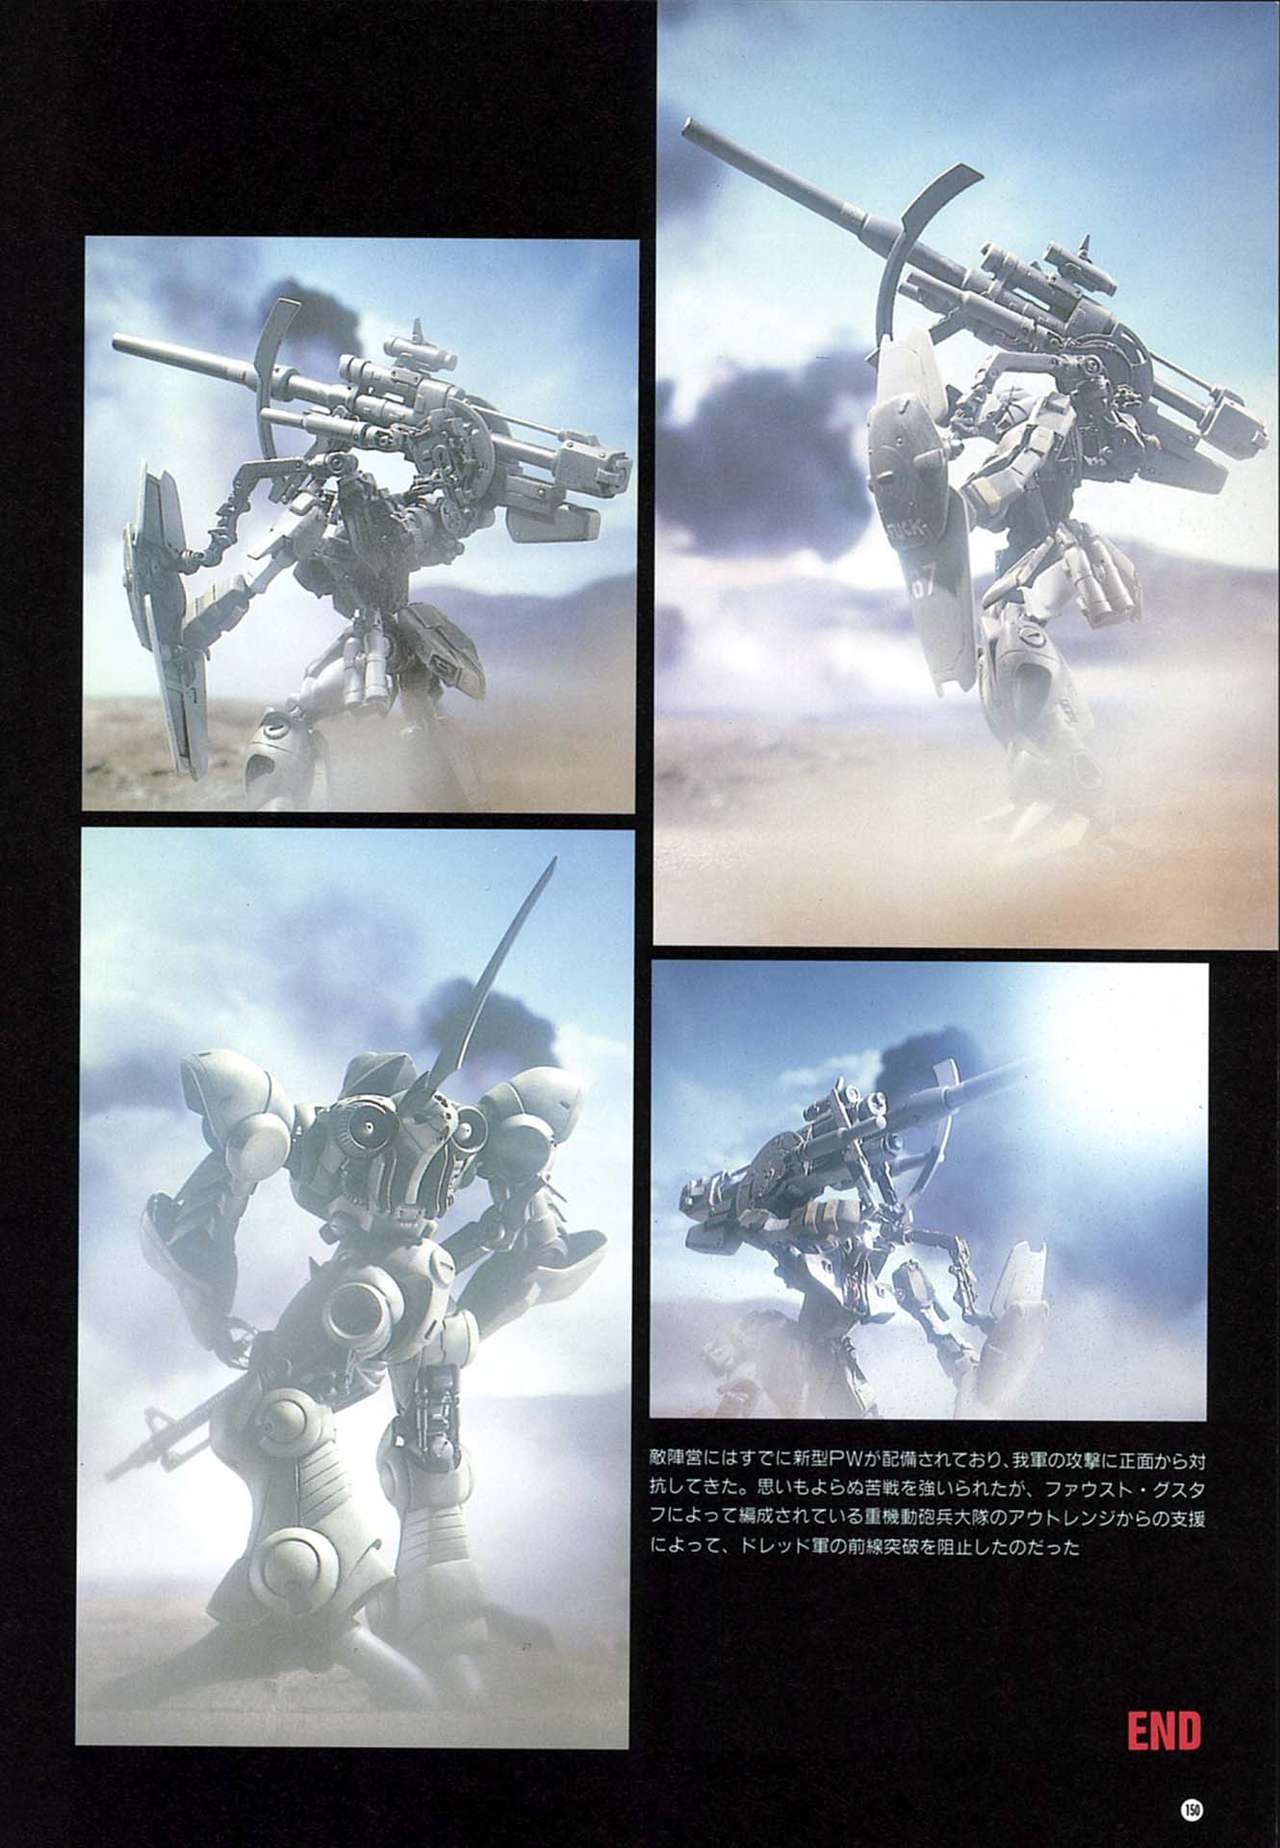 [Kazuhisa Kondo] Kazuhisa Kondo 2D & 3D Works - Go Ahead - From Mobile Suit Gundam to Original Mechanism 149